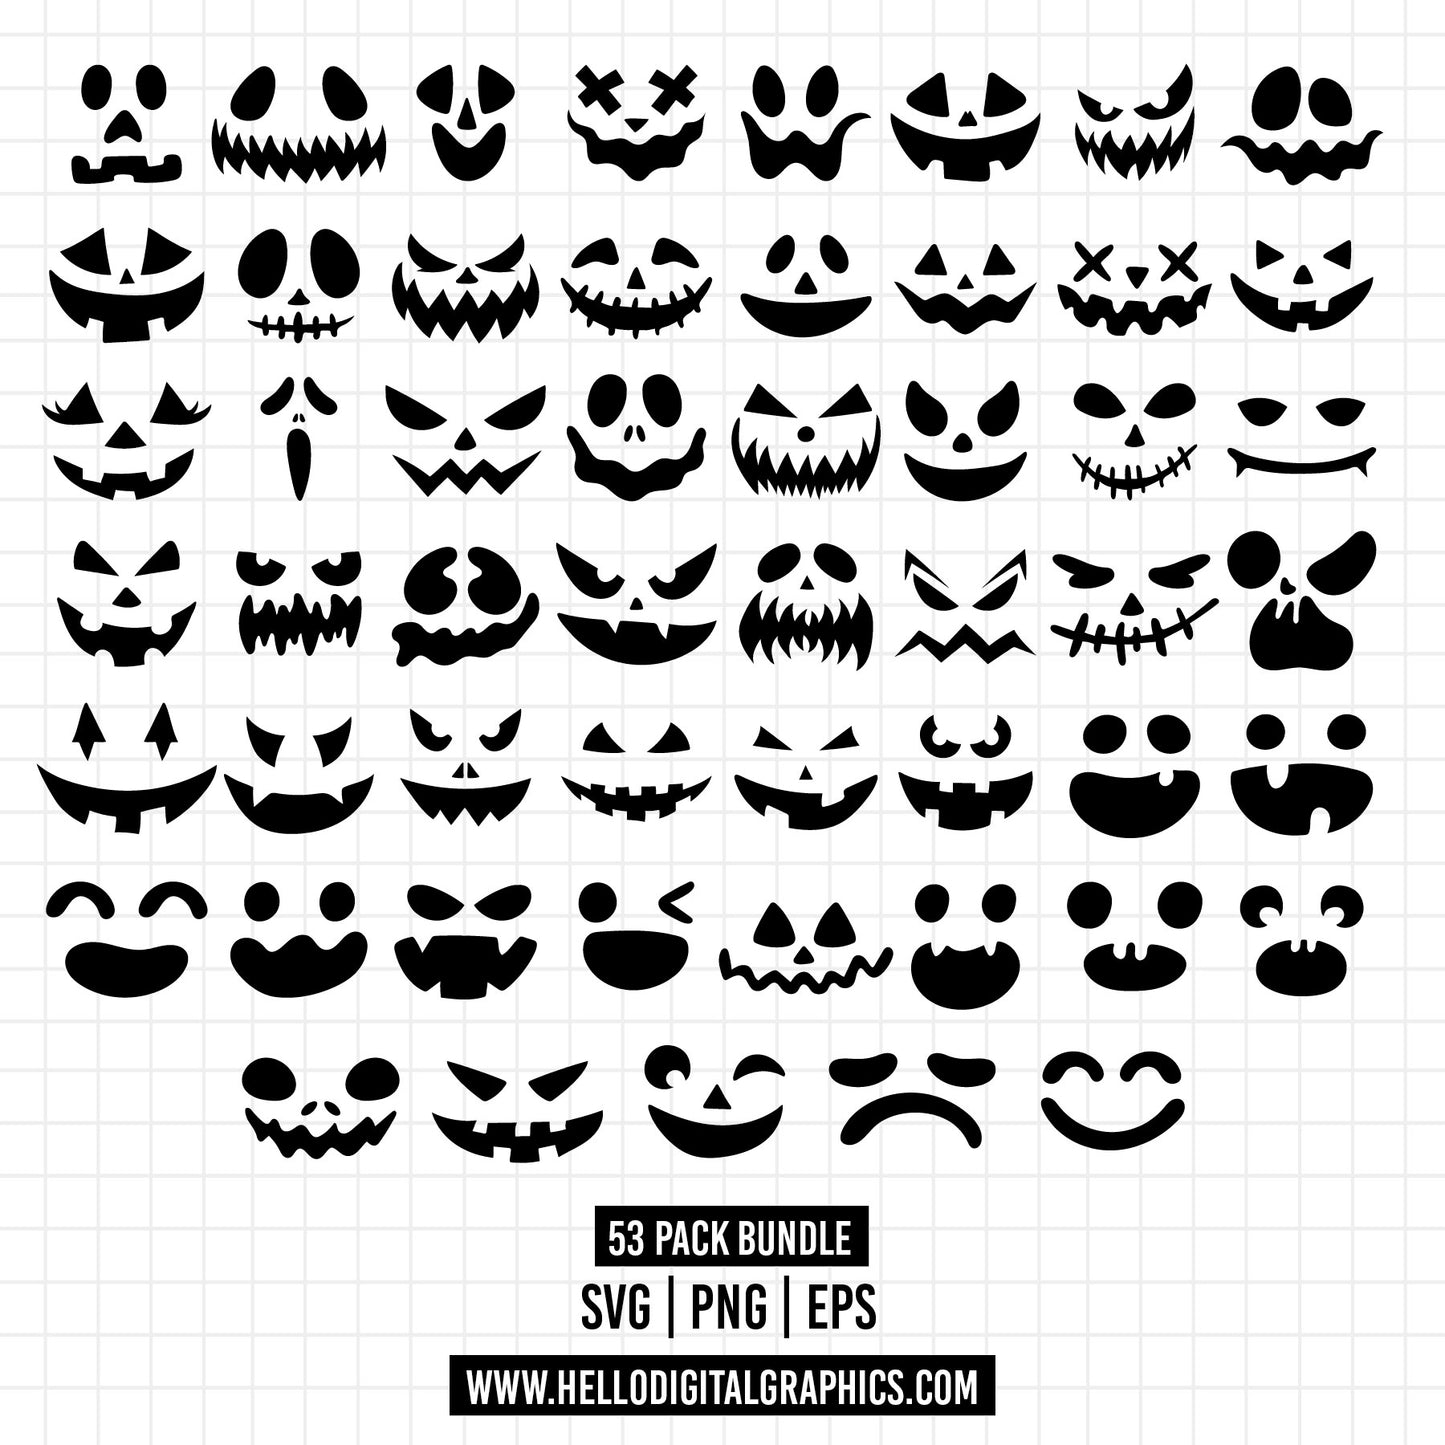 COD1385- Pumpkin Face Svg, Jack O Lantern faces, Halloween pumpkins faces, Pumpkin Faces Clipart, Pumpkin Faces Cut File, Halloween face svg